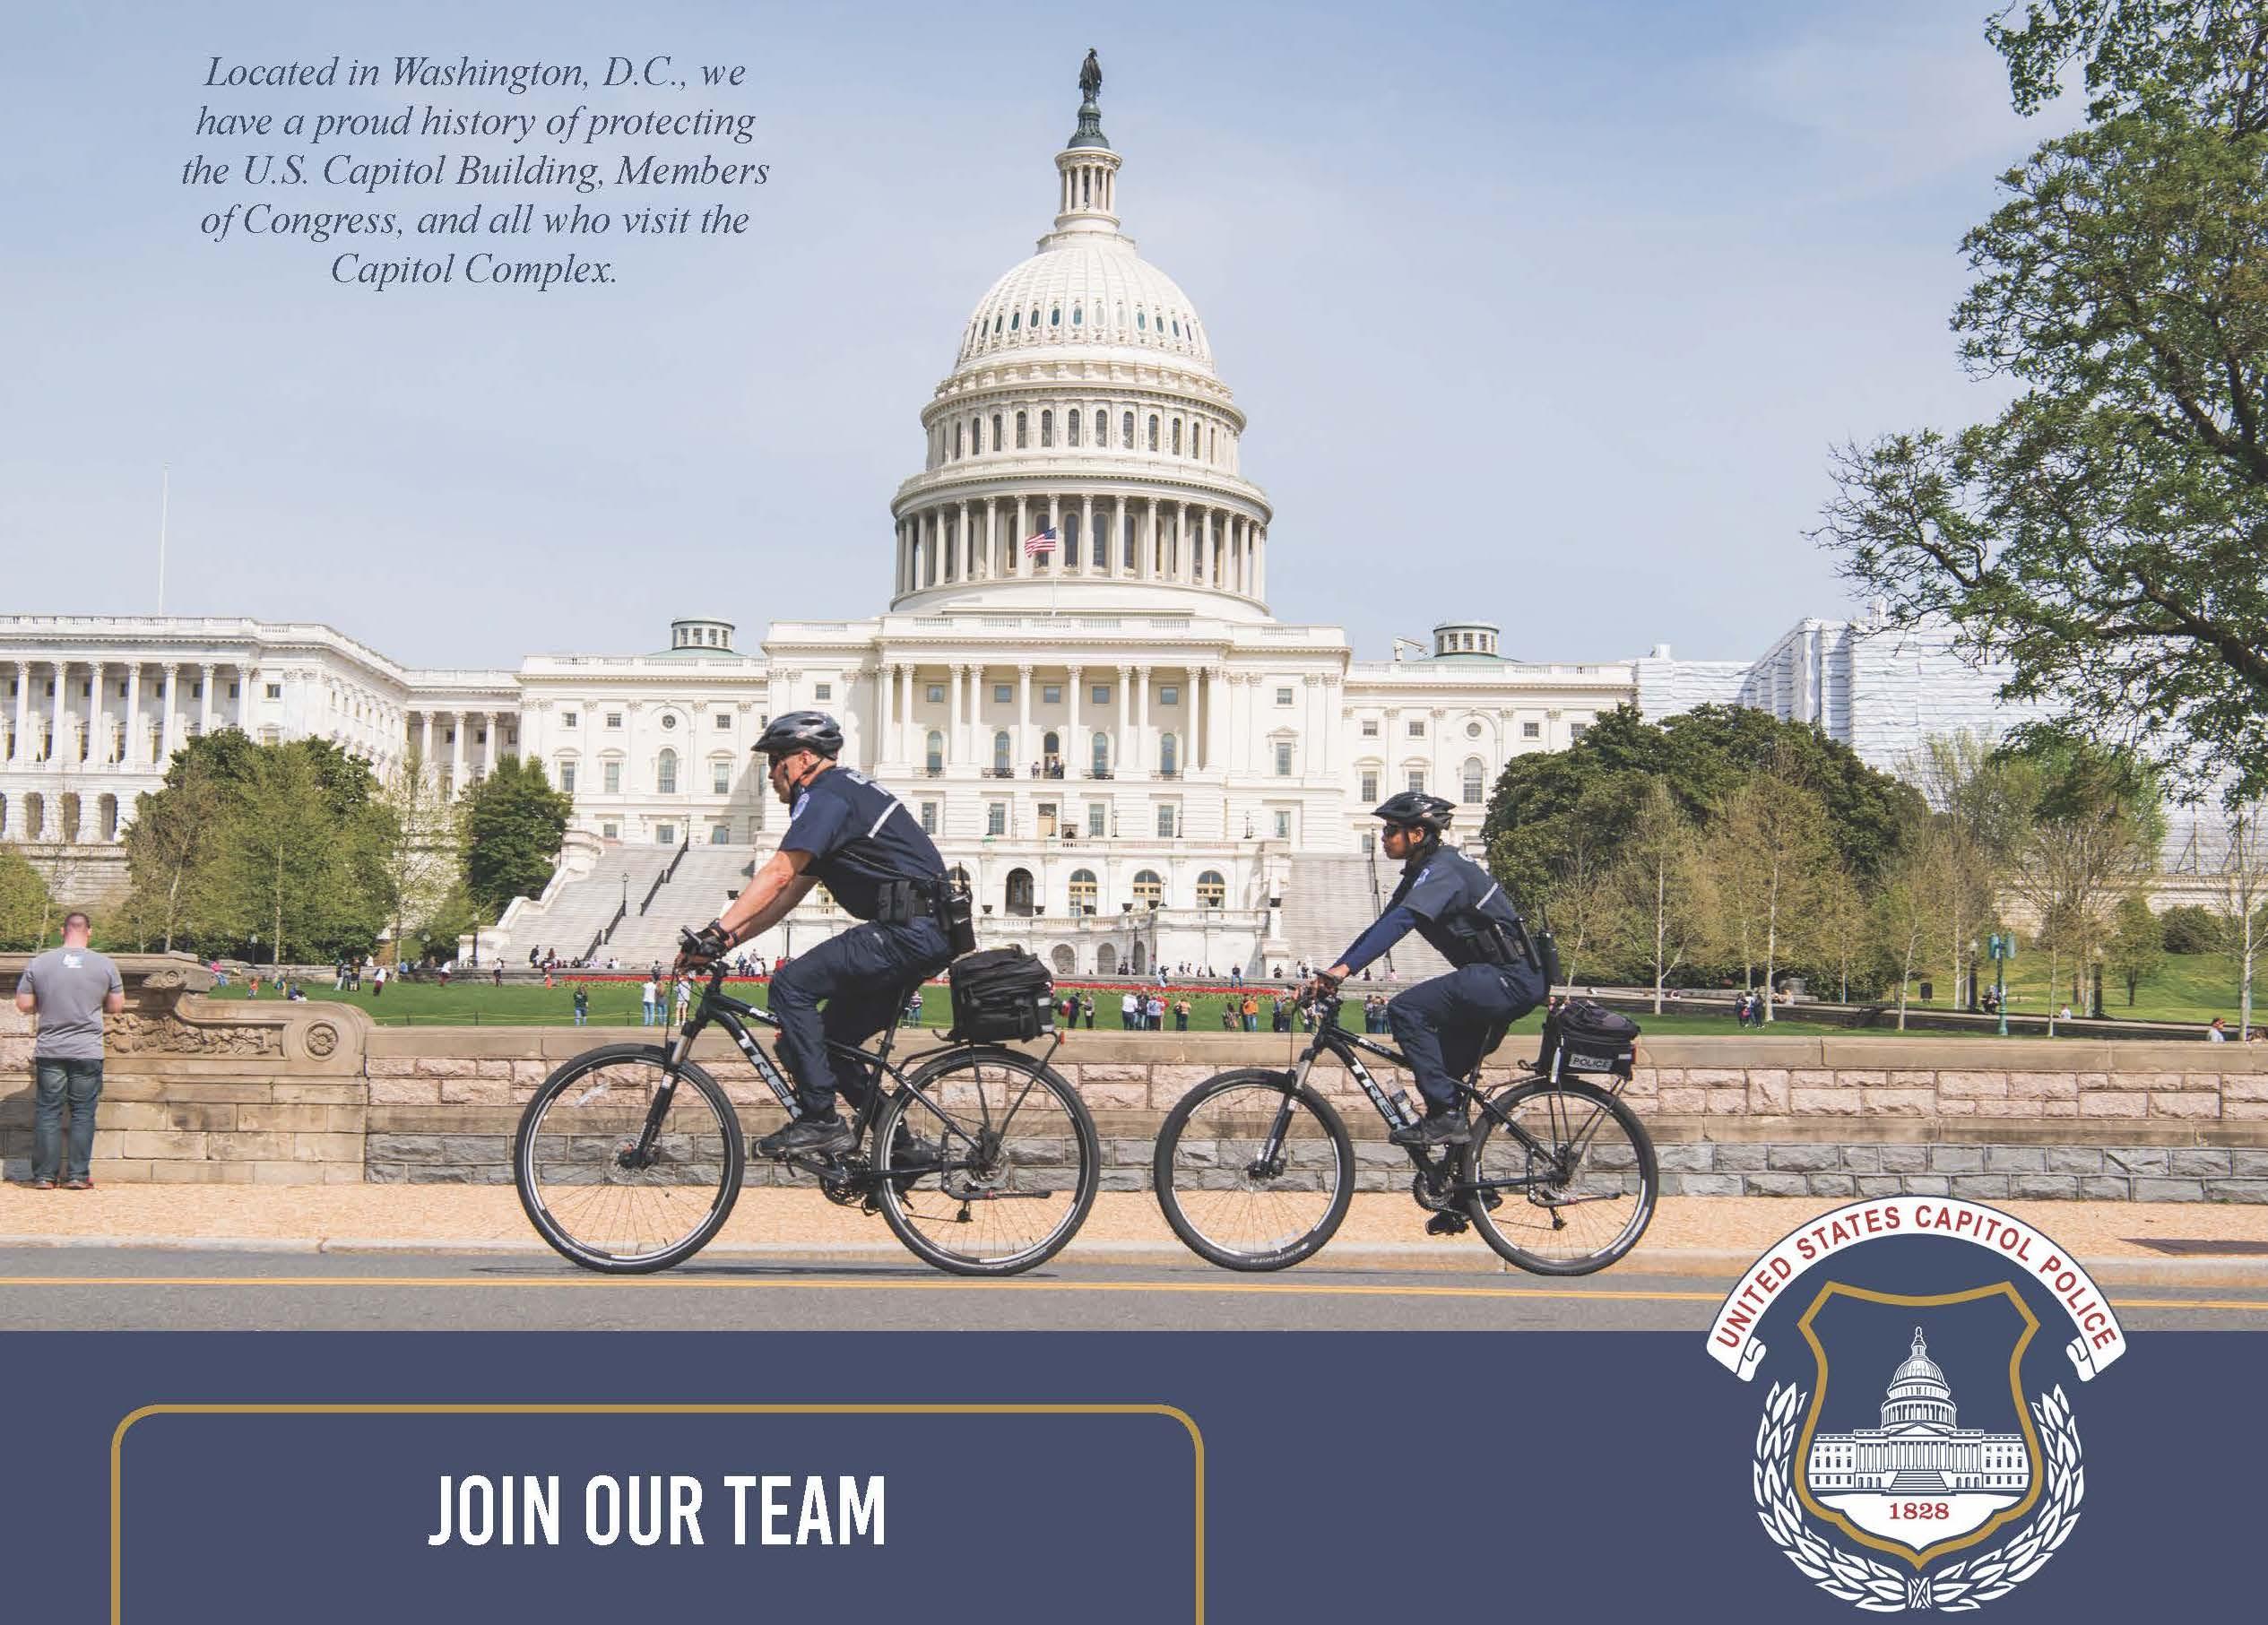 U.S. Capitol Police Picture